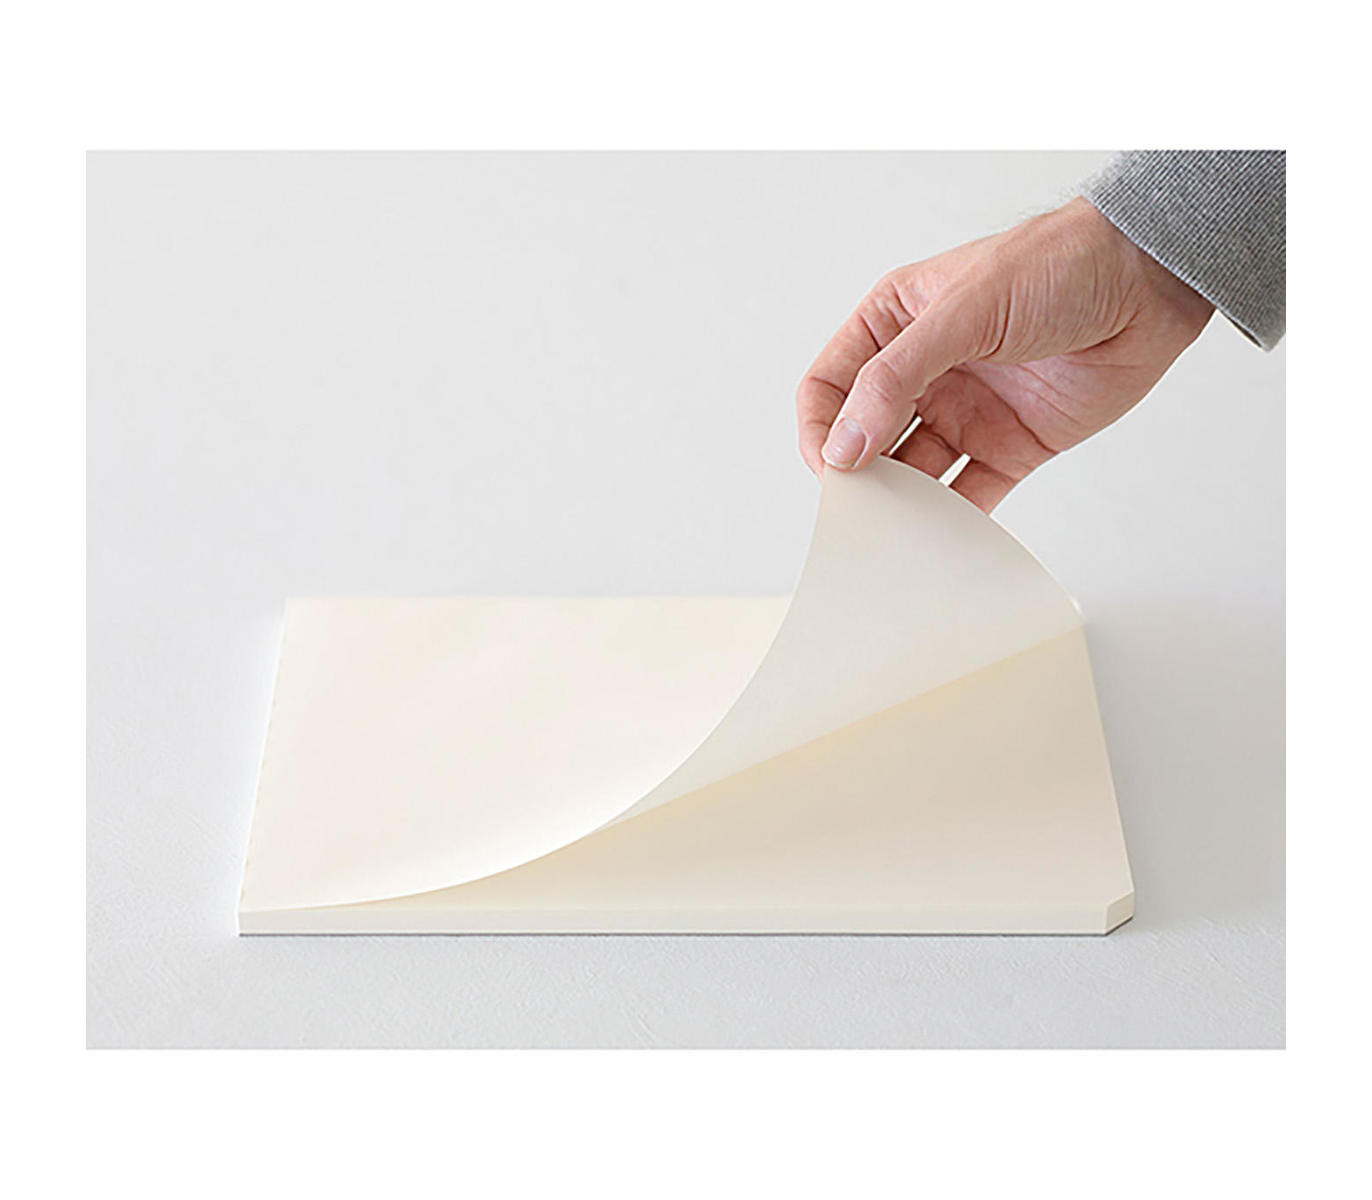 [MD] Paper Pad (A4)